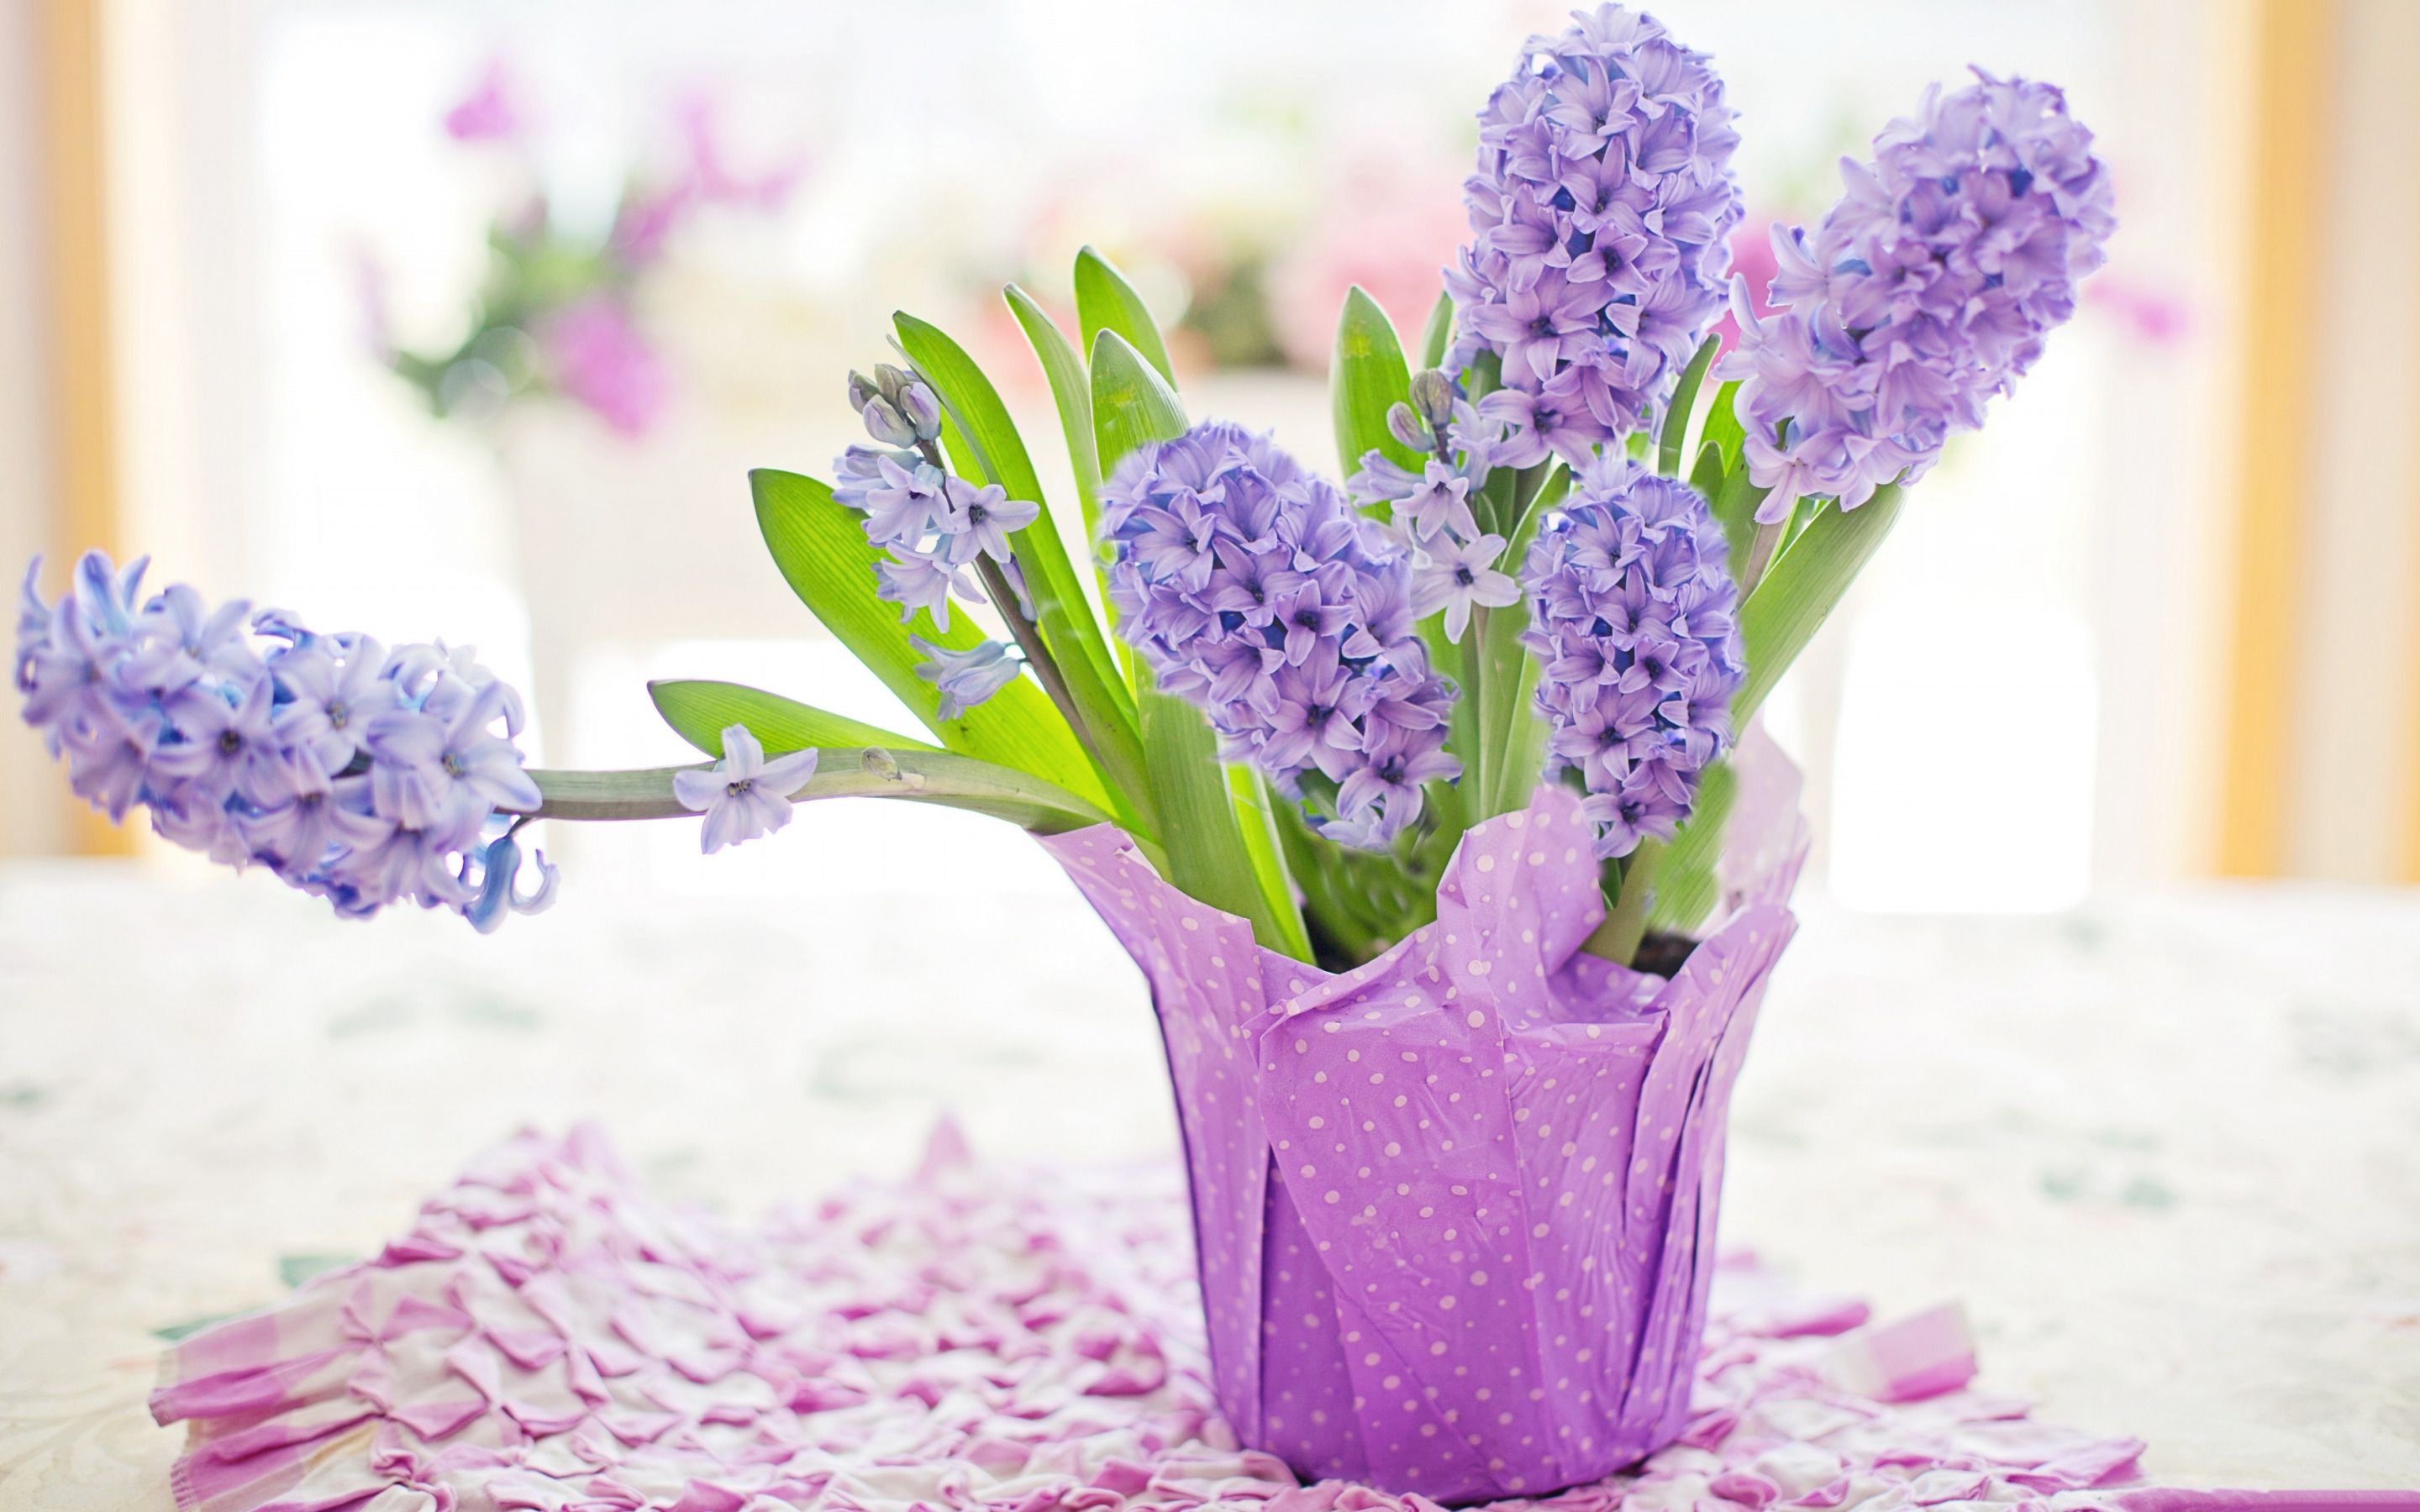 Download wallpaper hyacinths, purple flowers in a pot, beautiful